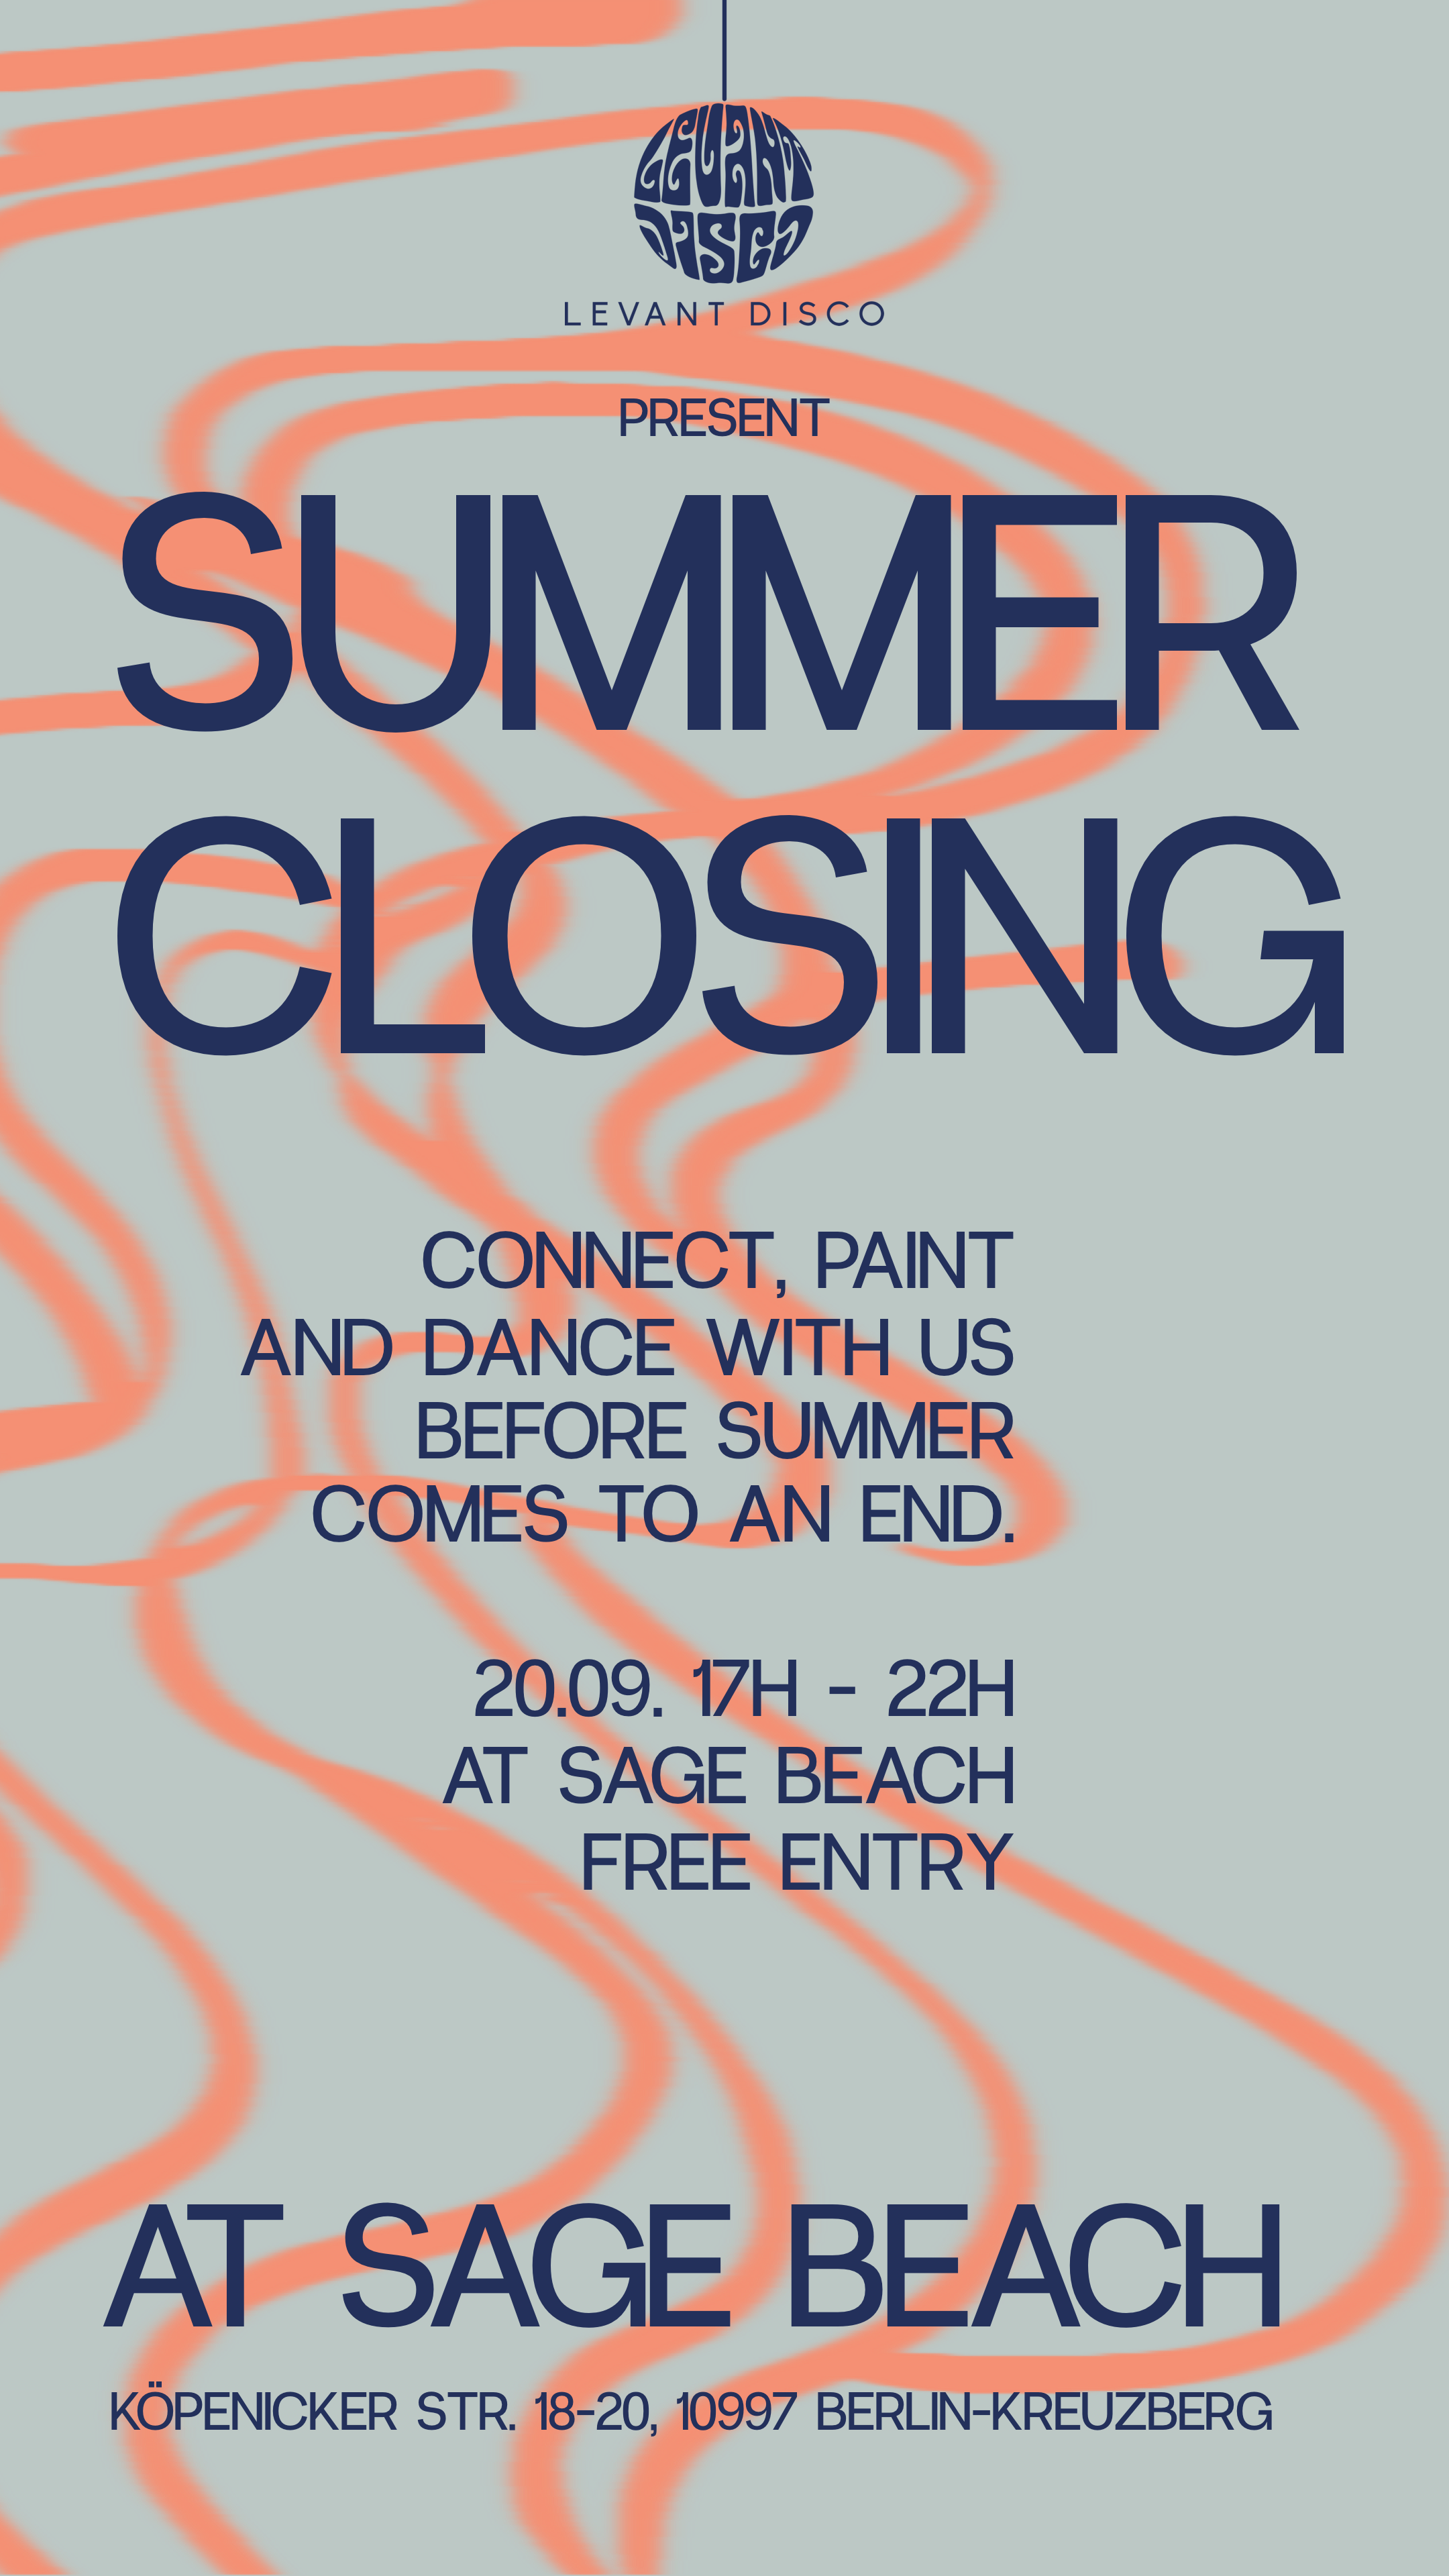 Summer Closing at Sage Beach presented by Levant Disco x Praise x Laschian Berlin - フライヤー表